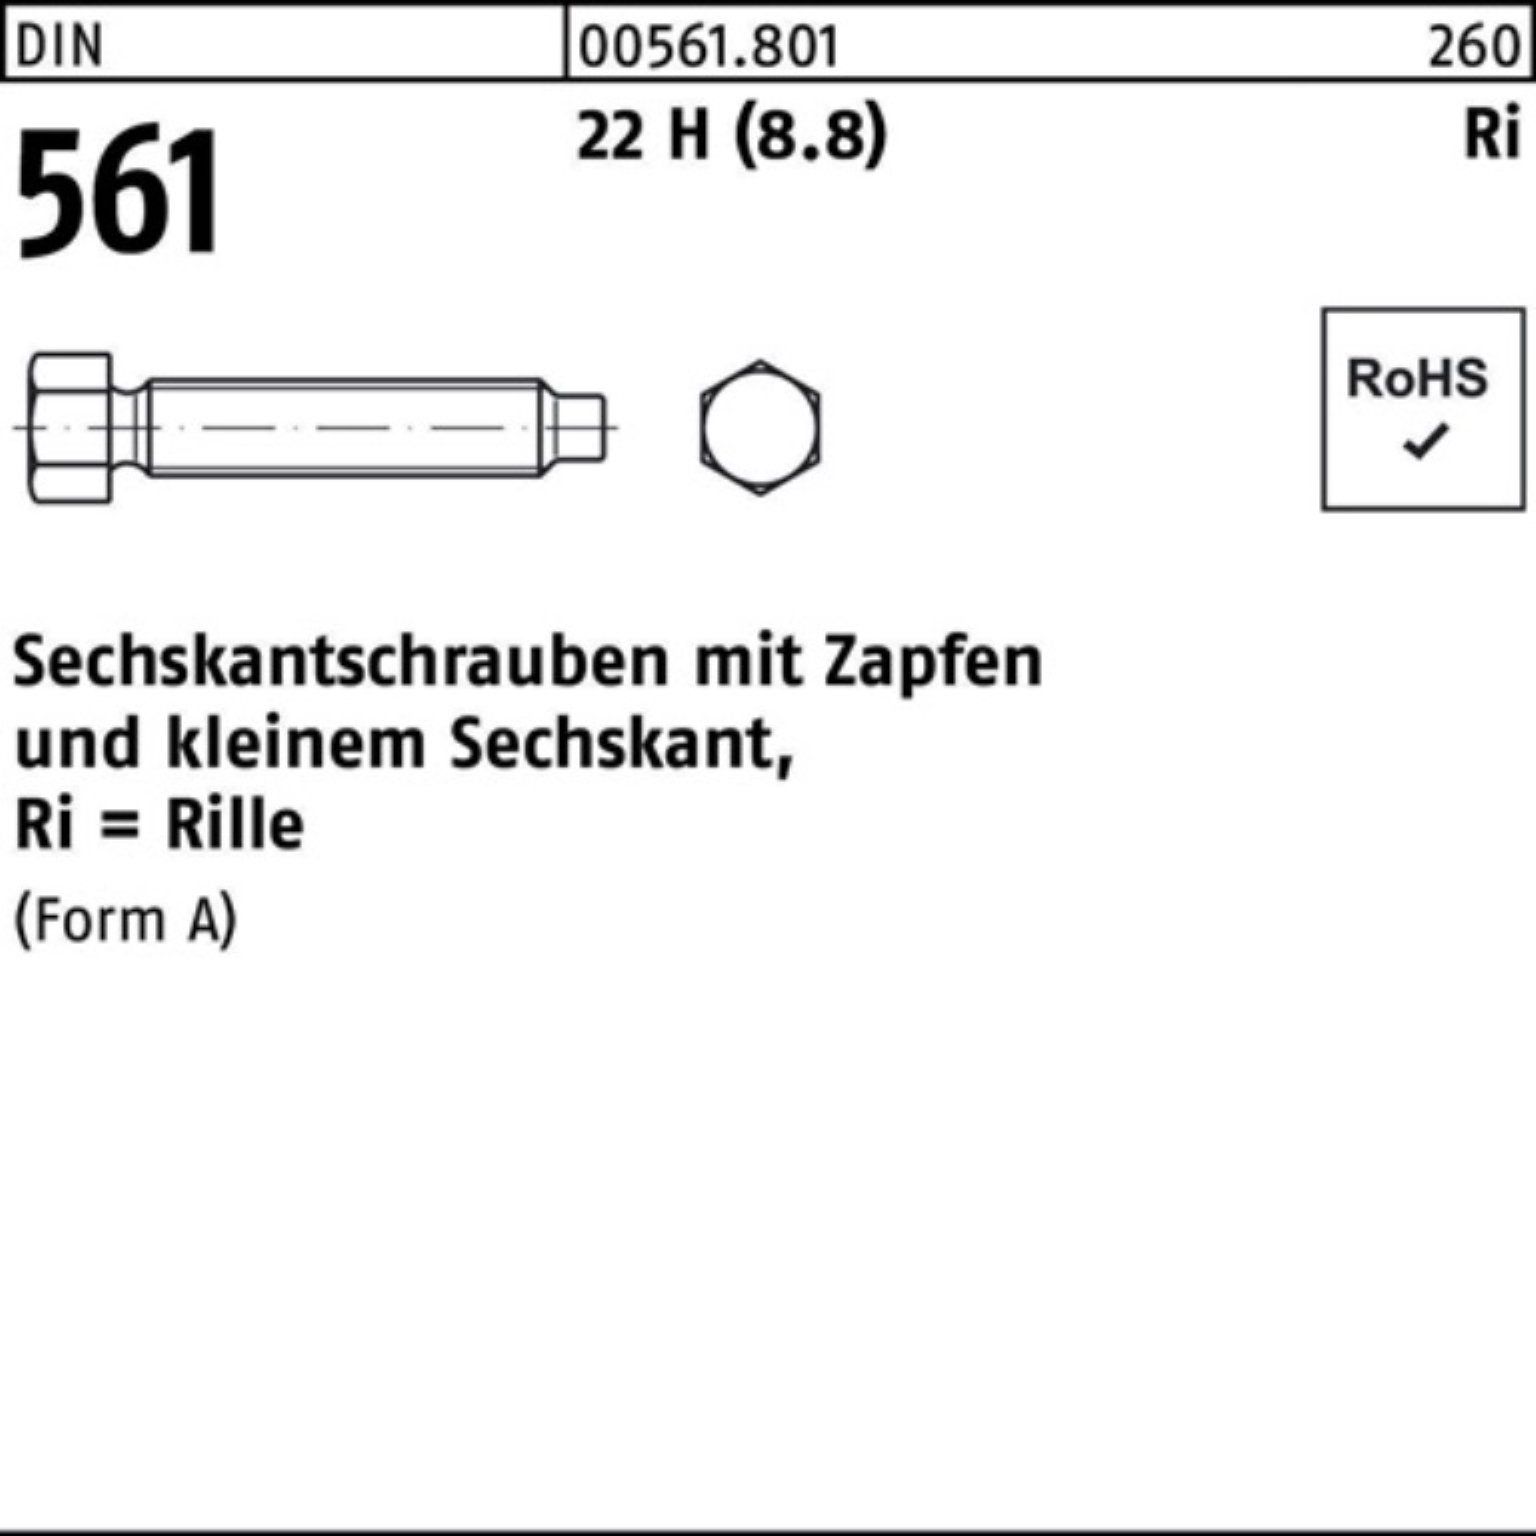 Reyher Sechskantschraube 100er Pack Sechskantschraube 10 St H Zapfen (8.8) 22 AM DIN 16x 90 561